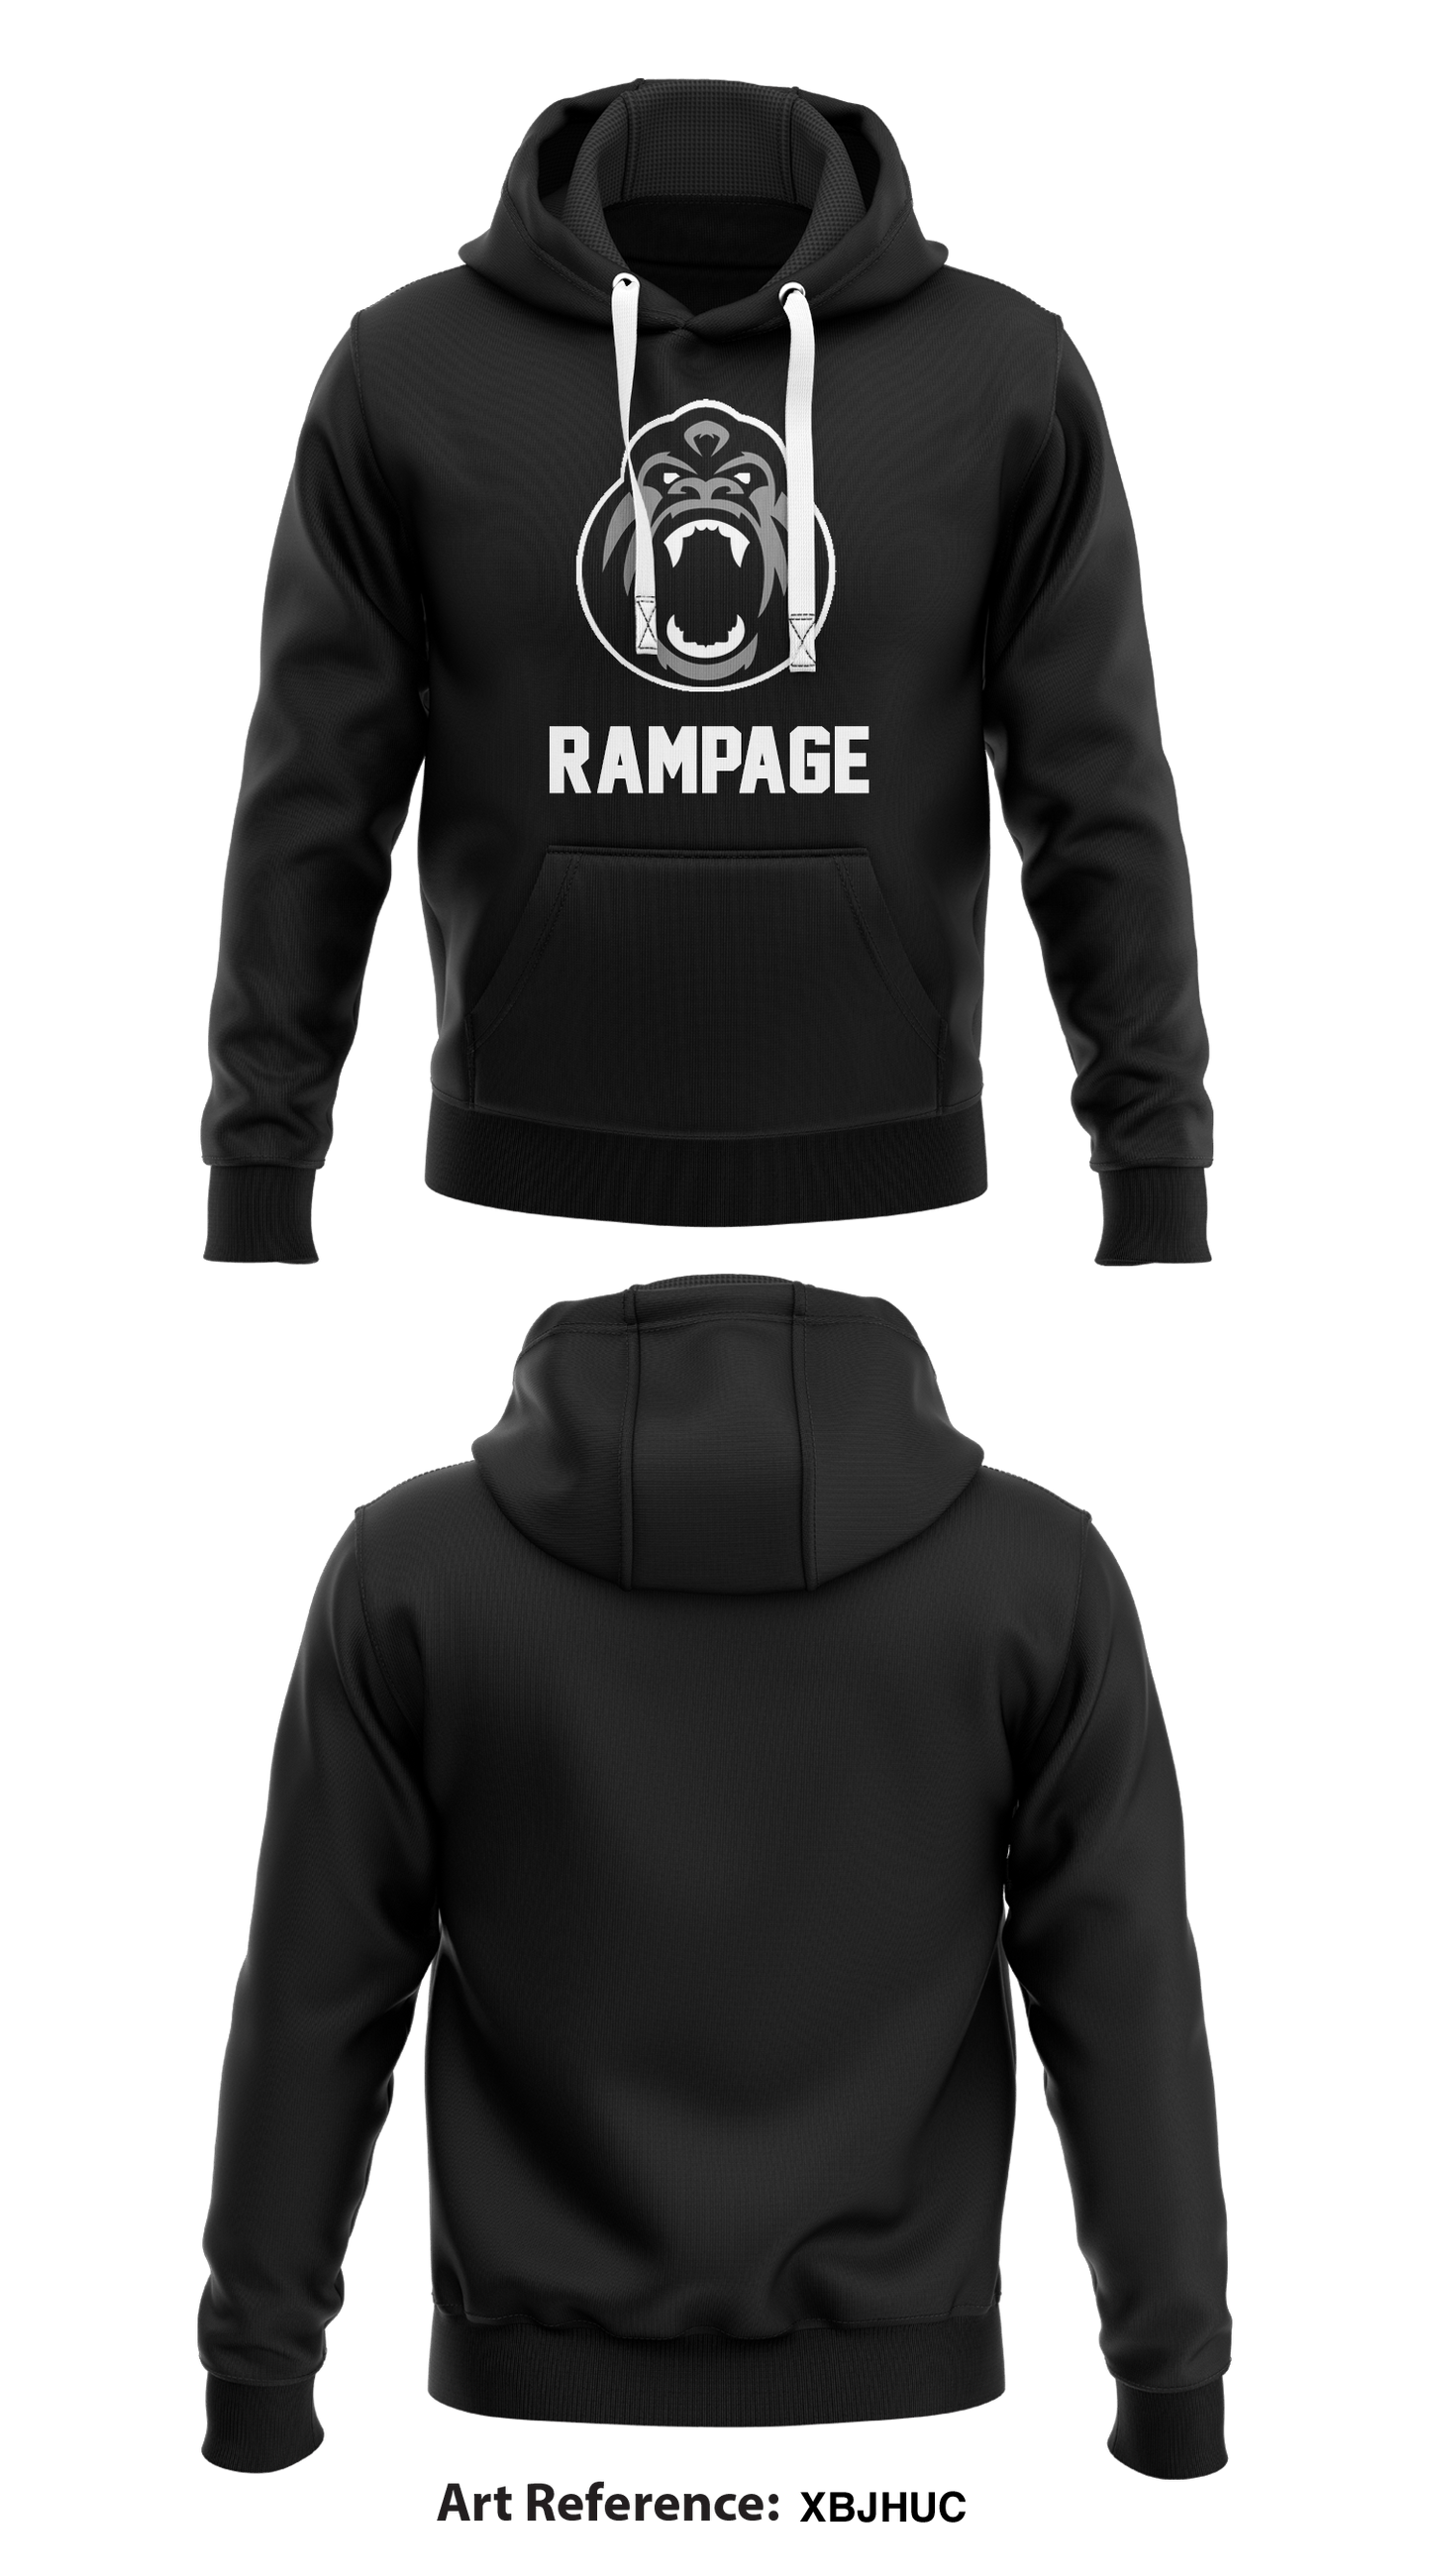 Rampage Store 2 Core Men's Hooded Performance Sweatshirt - XbJhuC